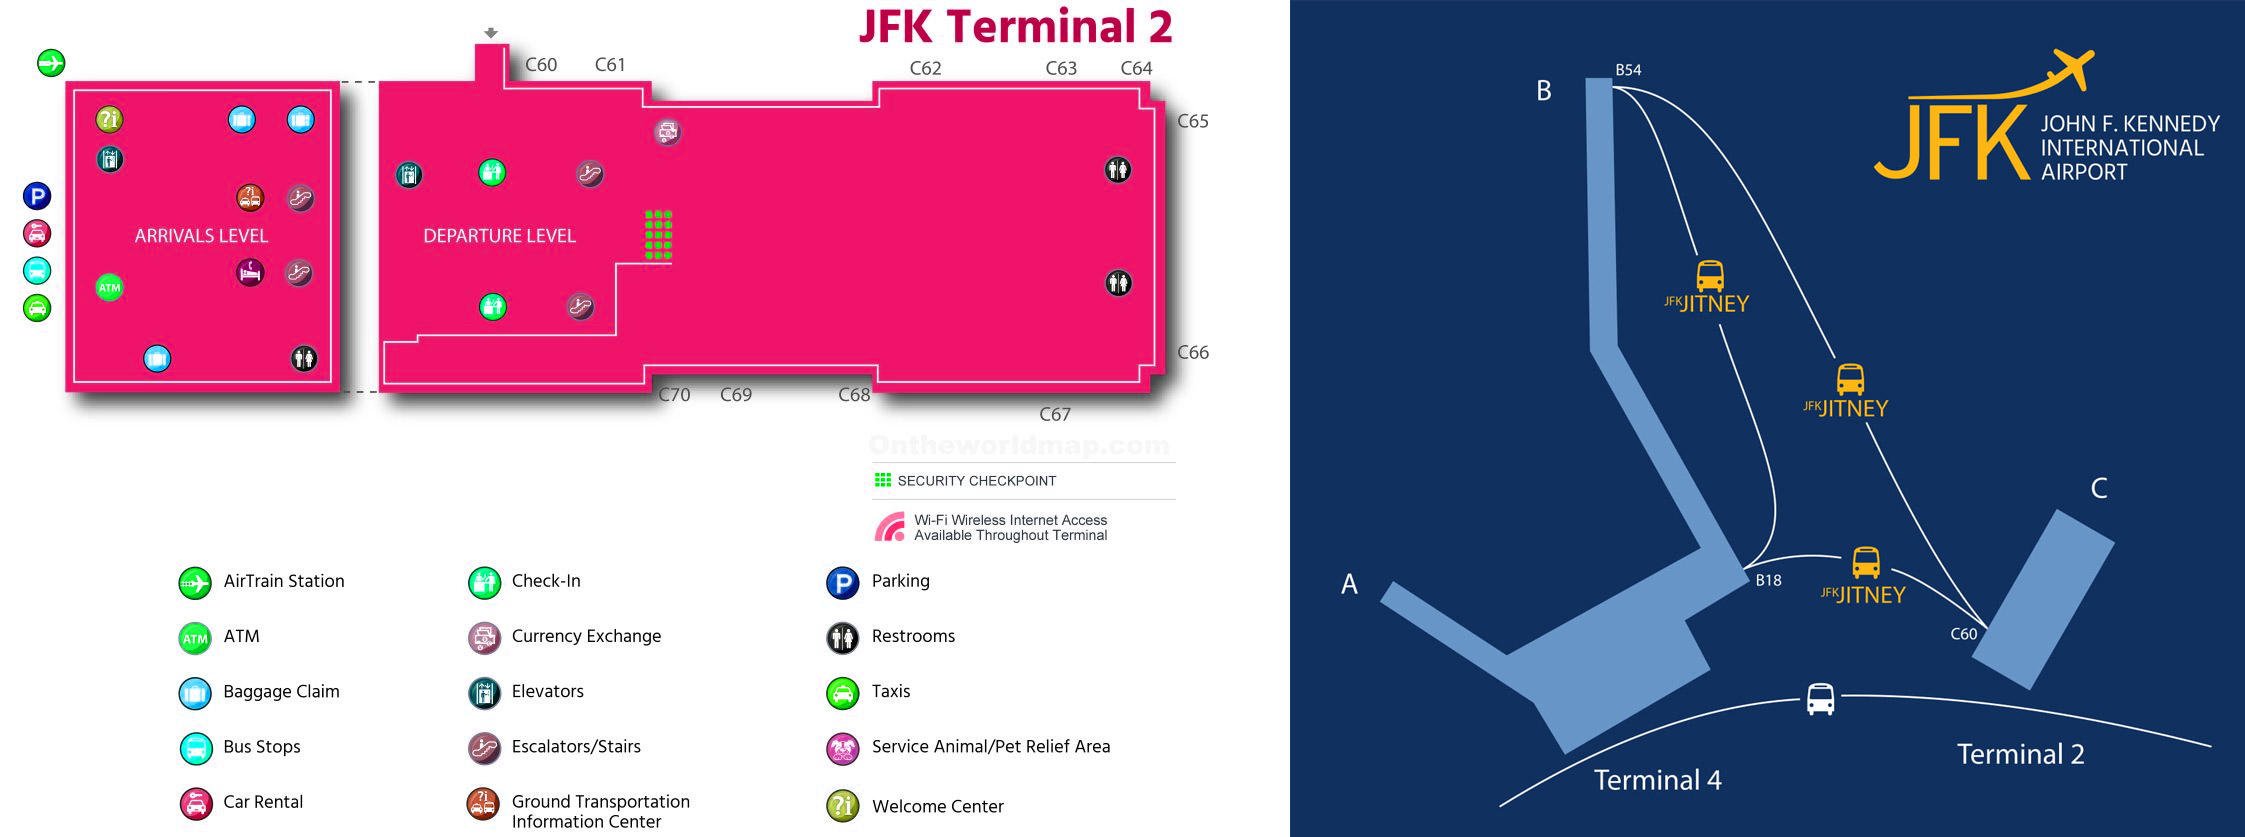 Terminal 2 map jfk New York